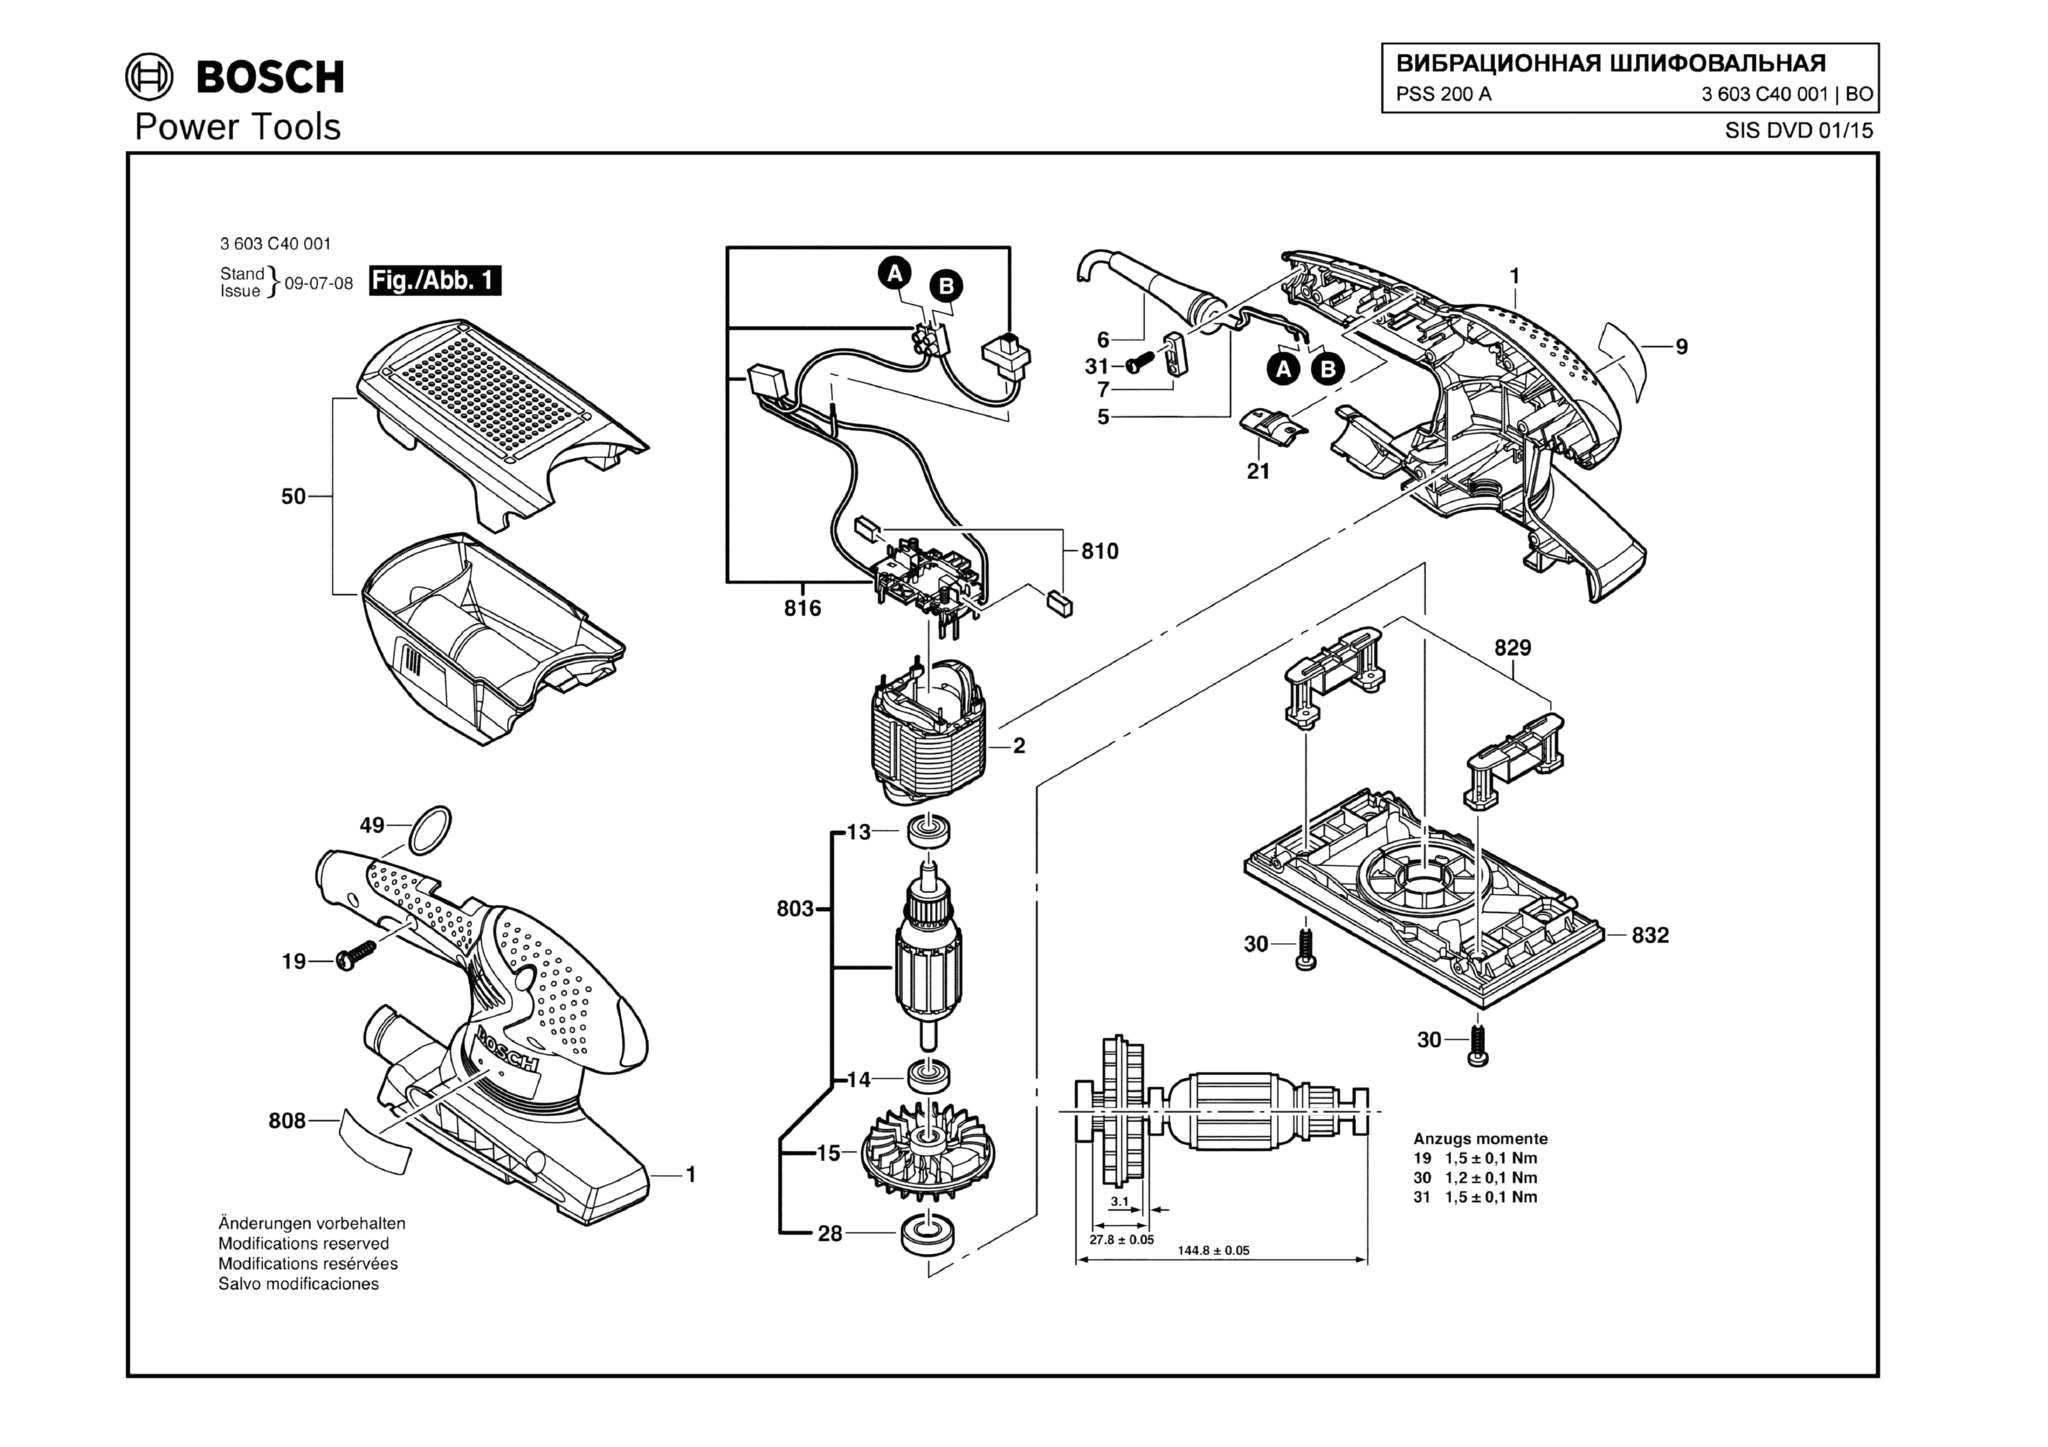 Запчасти, схема и деталировка Bosch PSS 200 A (ТИП 3603C40001)